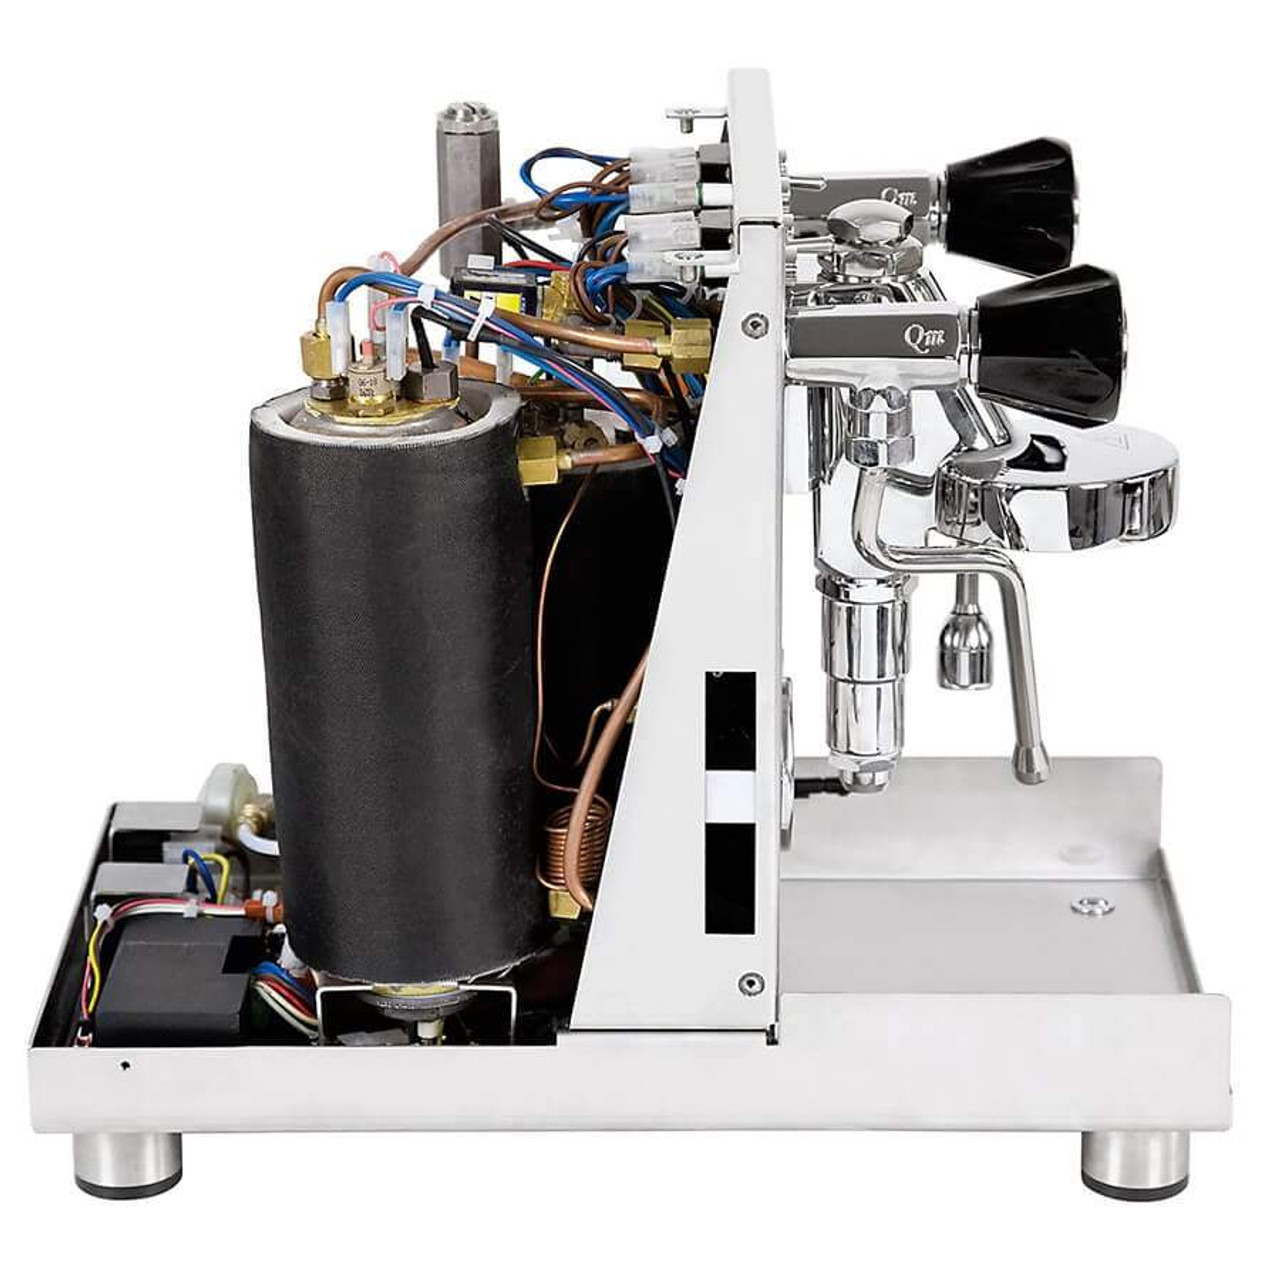 Quick Mill QM67 EVO  Quick Mill Dual Boiler QM67 Espresso Machine